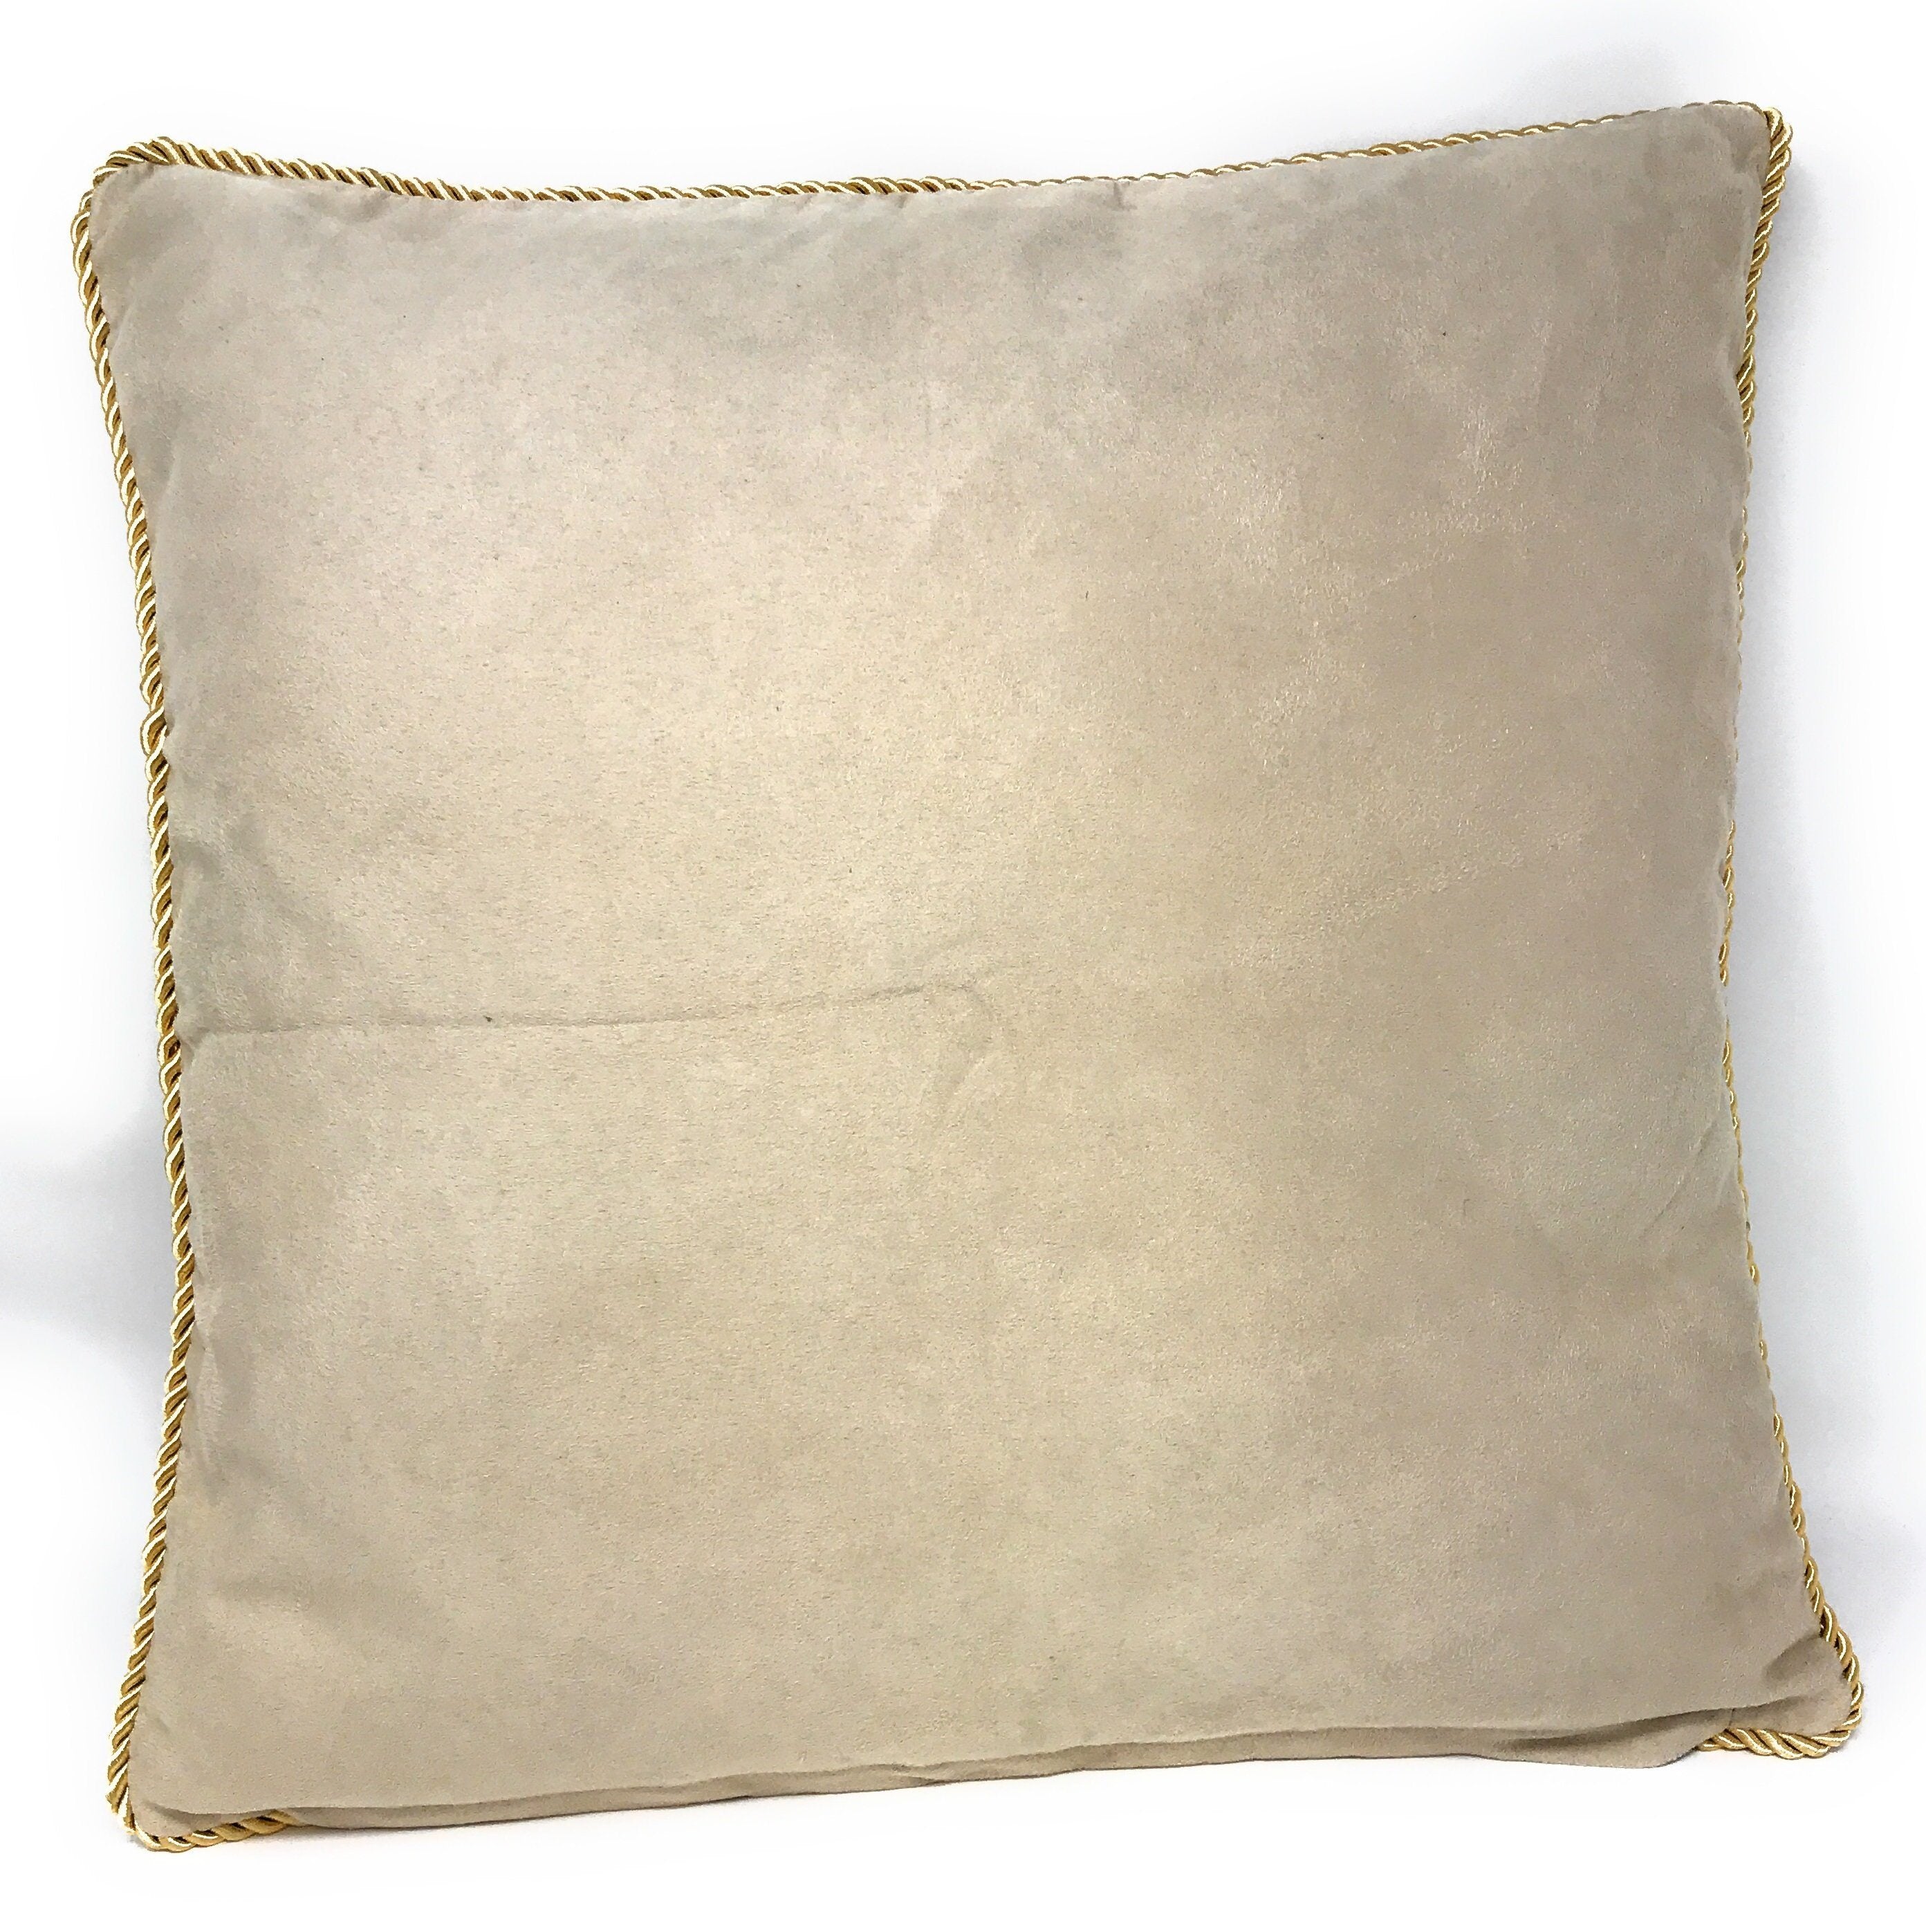 Phantoscope Patterned Velvet Tailored Edge Decorative Throw Pillow, 20 x  20, Coffee, 2 Pack 